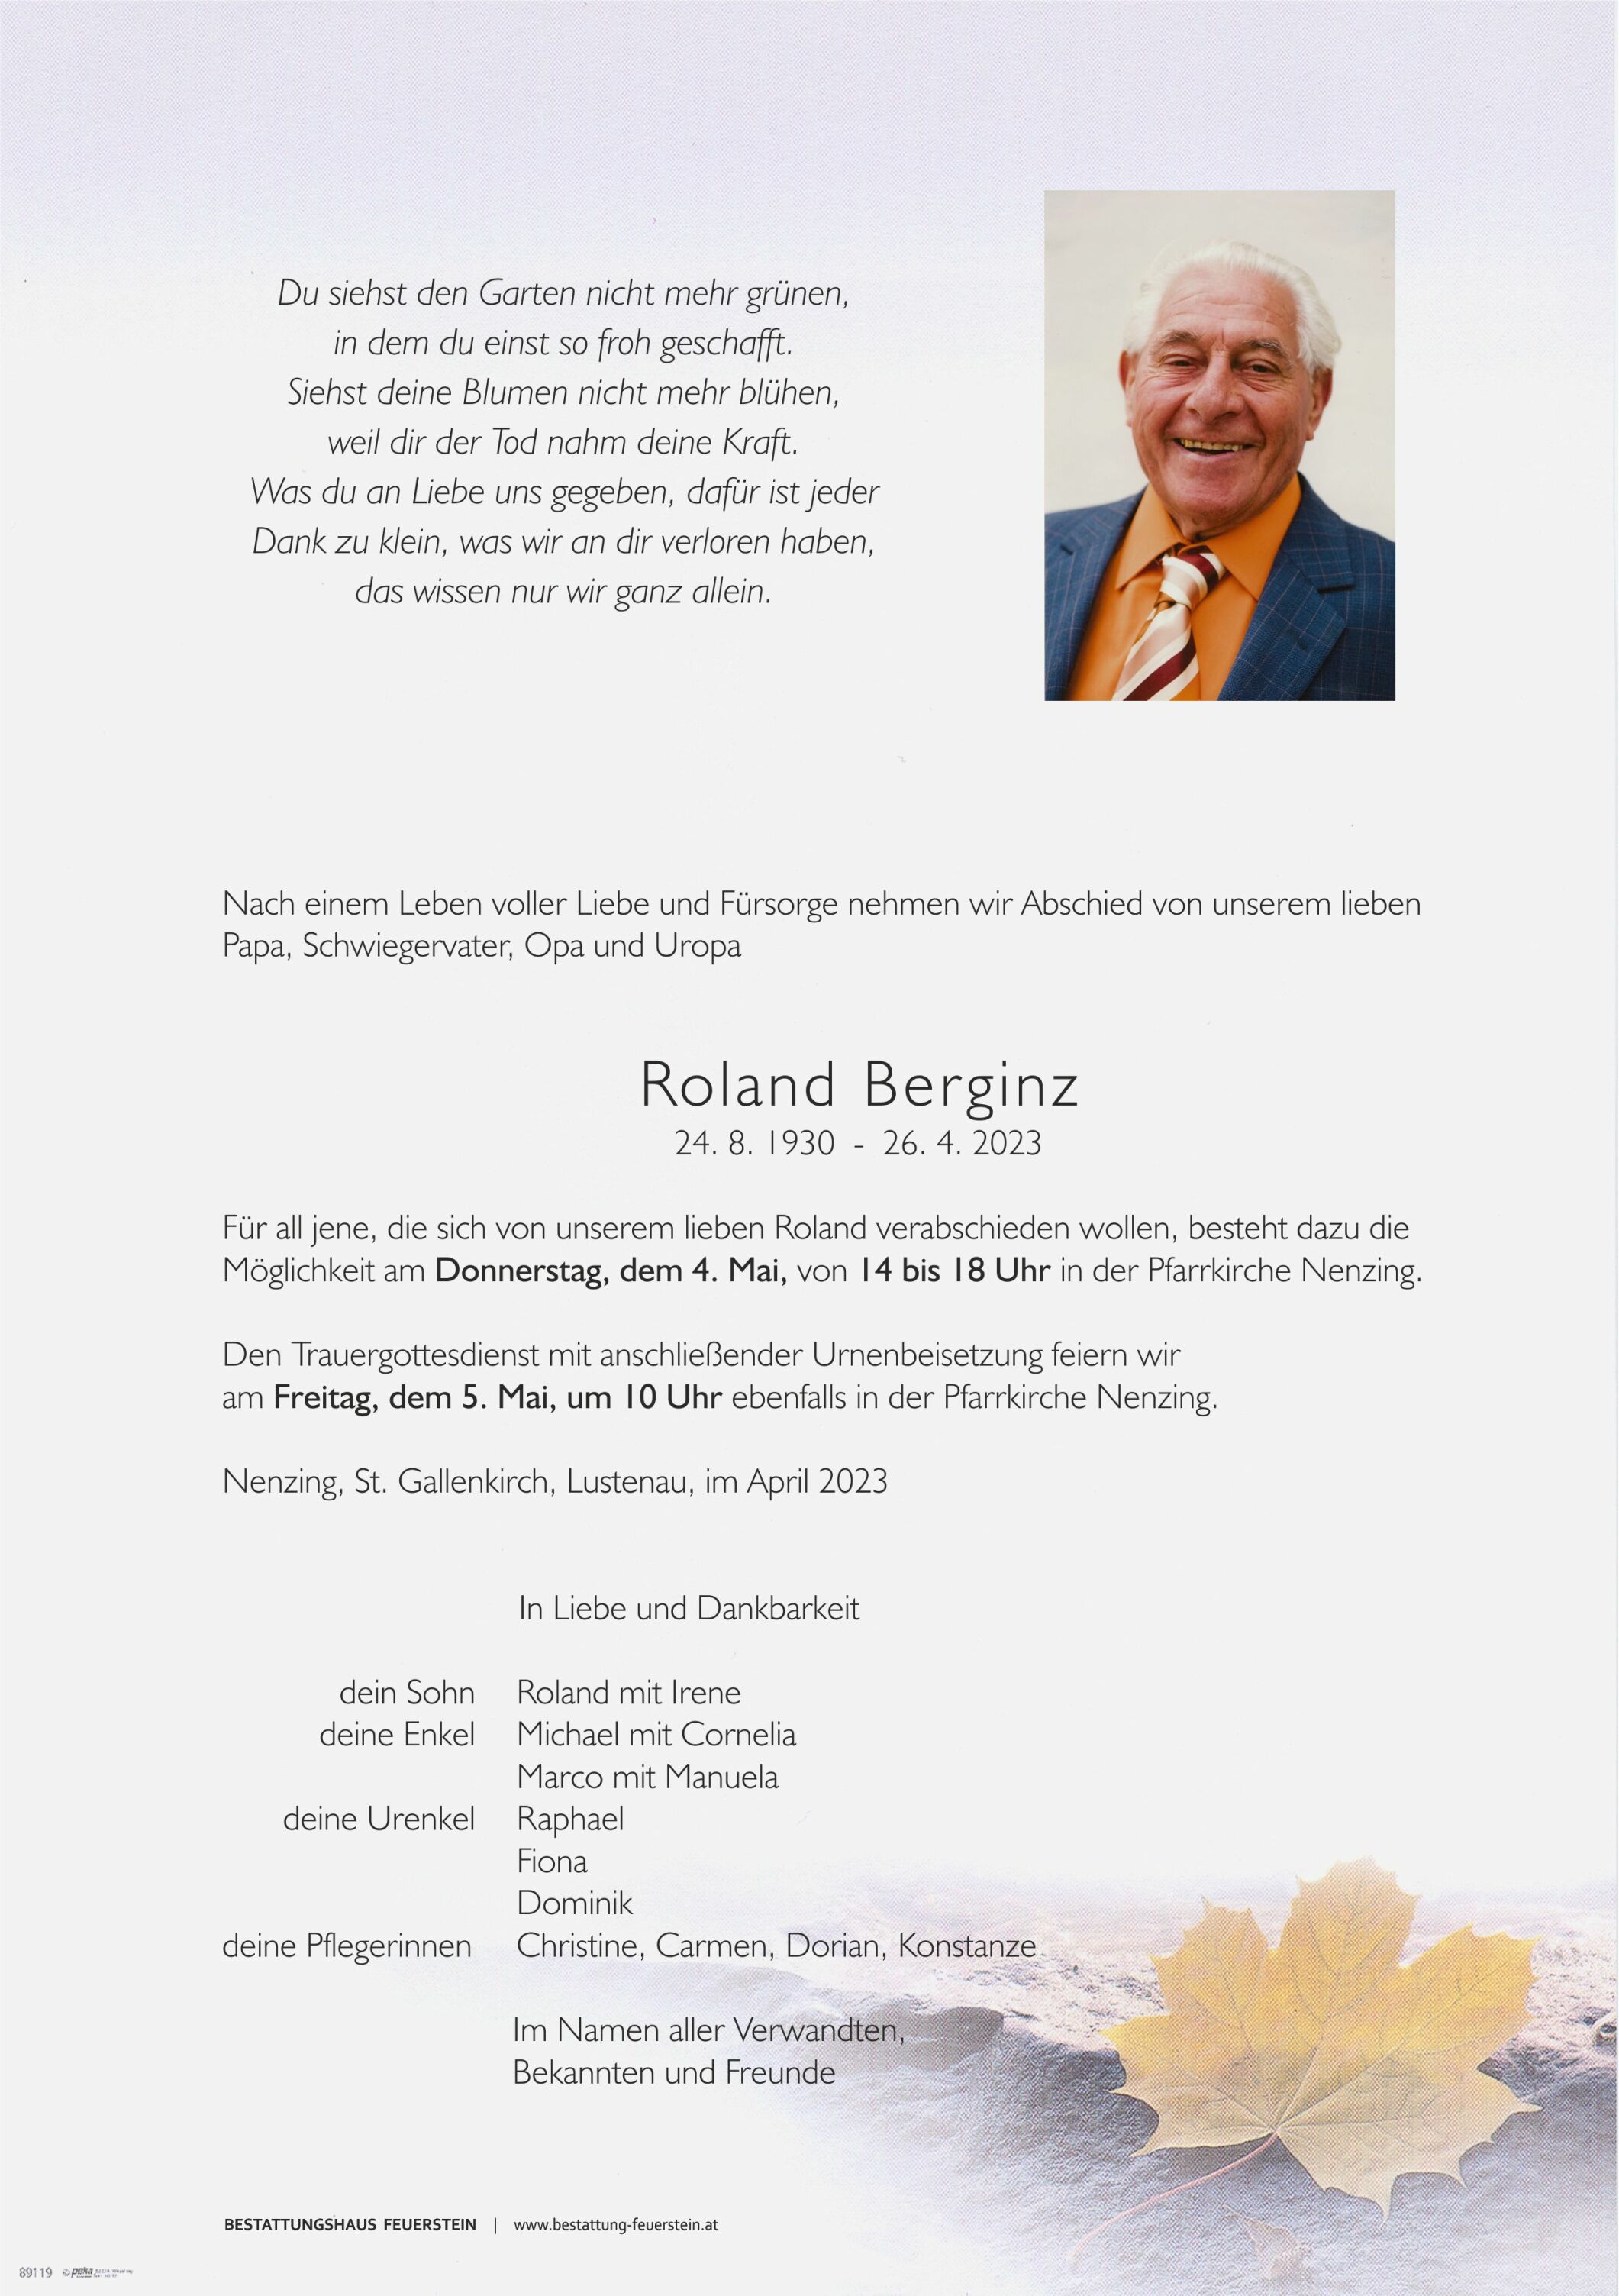 Roland Berginz